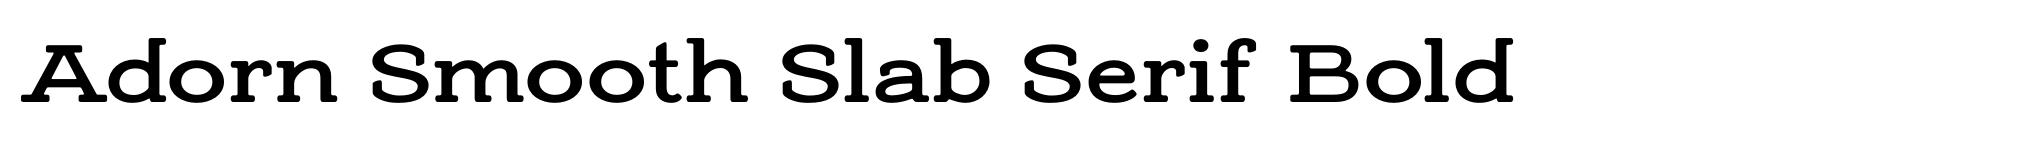 Adorn Smooth Slab Serif Bold image